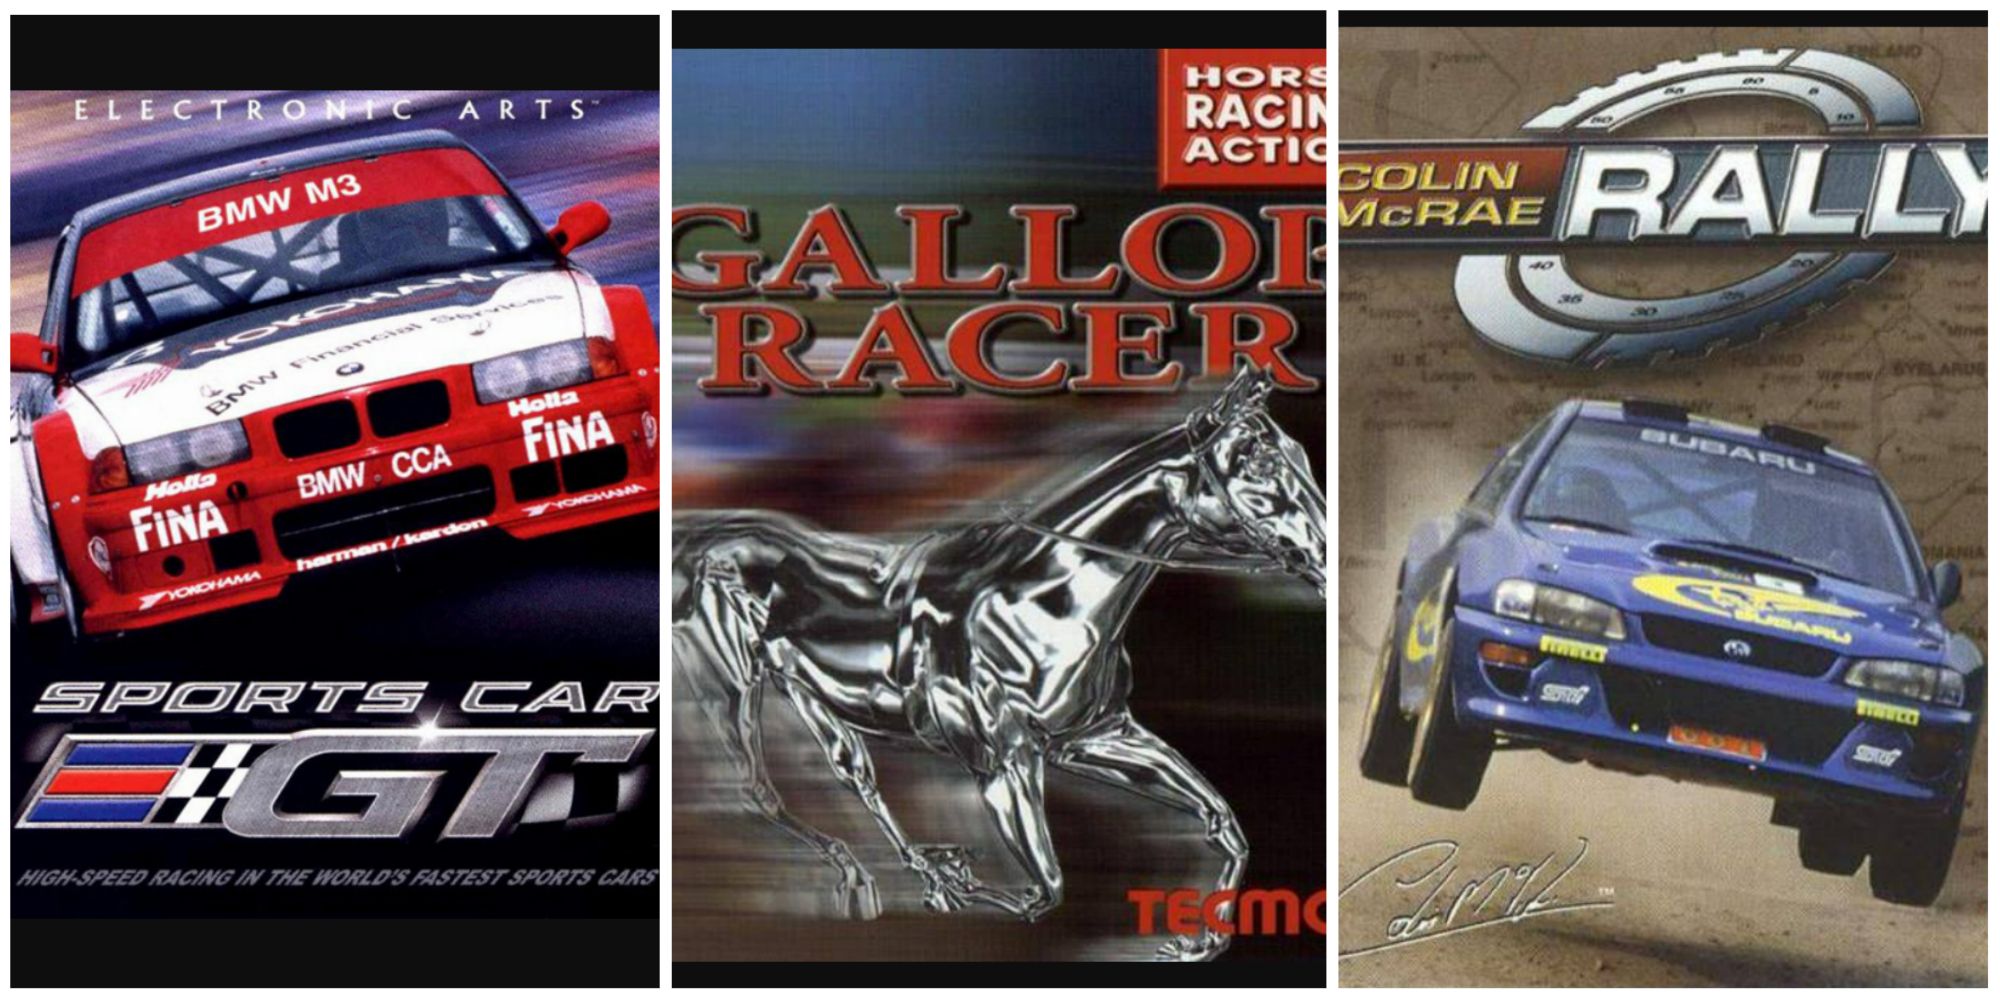 sports car gt box art vehicle, gallop racer box art silver horse, colin mcrae rally box art rally car featured